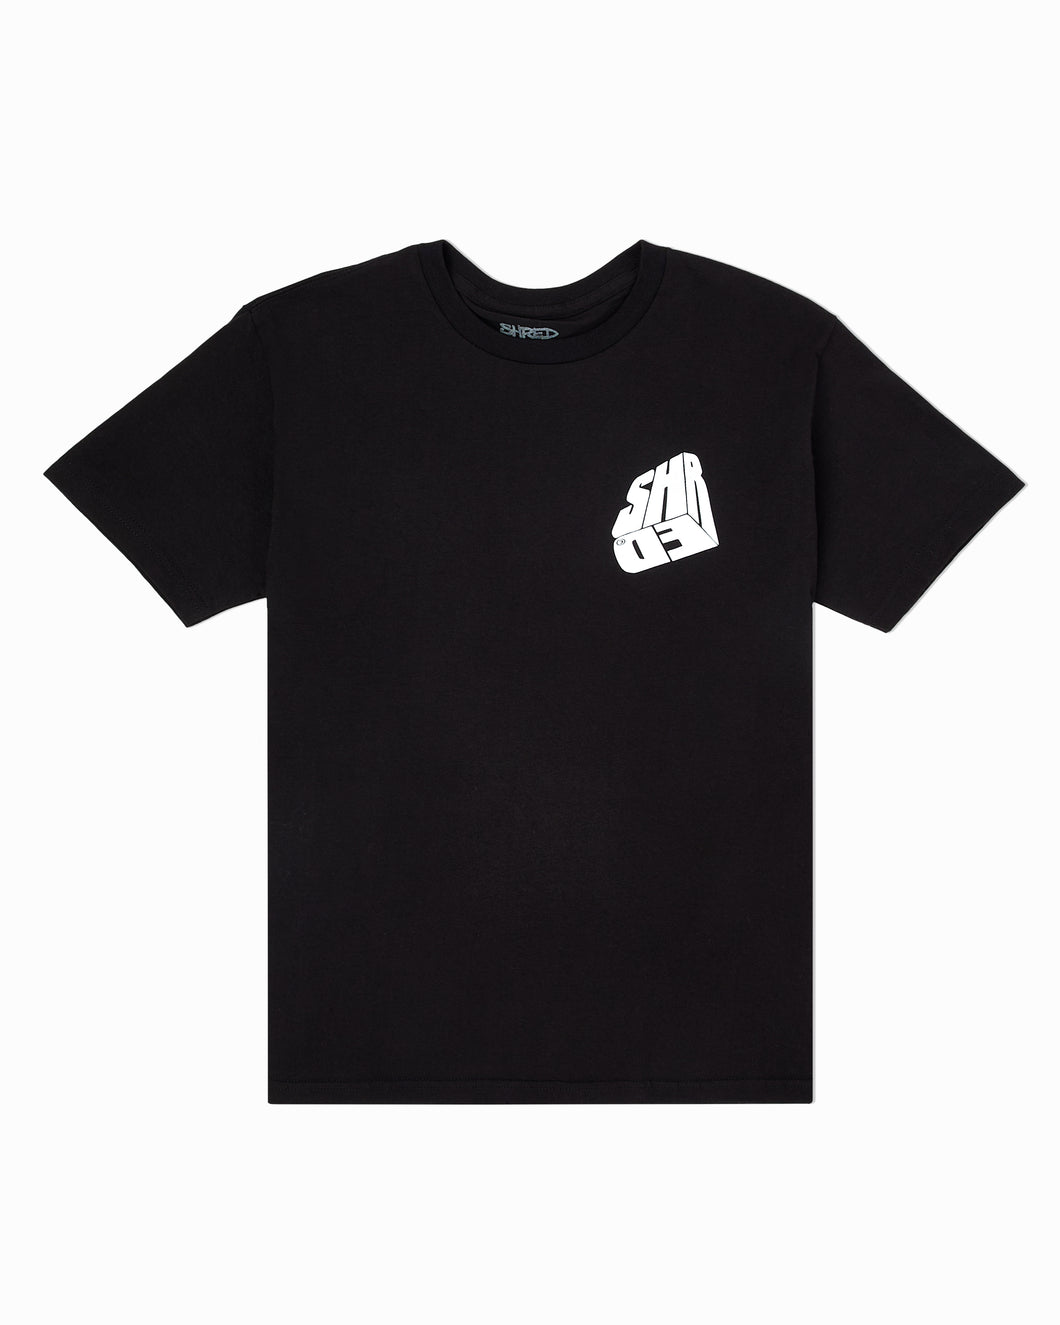 Black T-Shirt, White Shred Logo in a Box